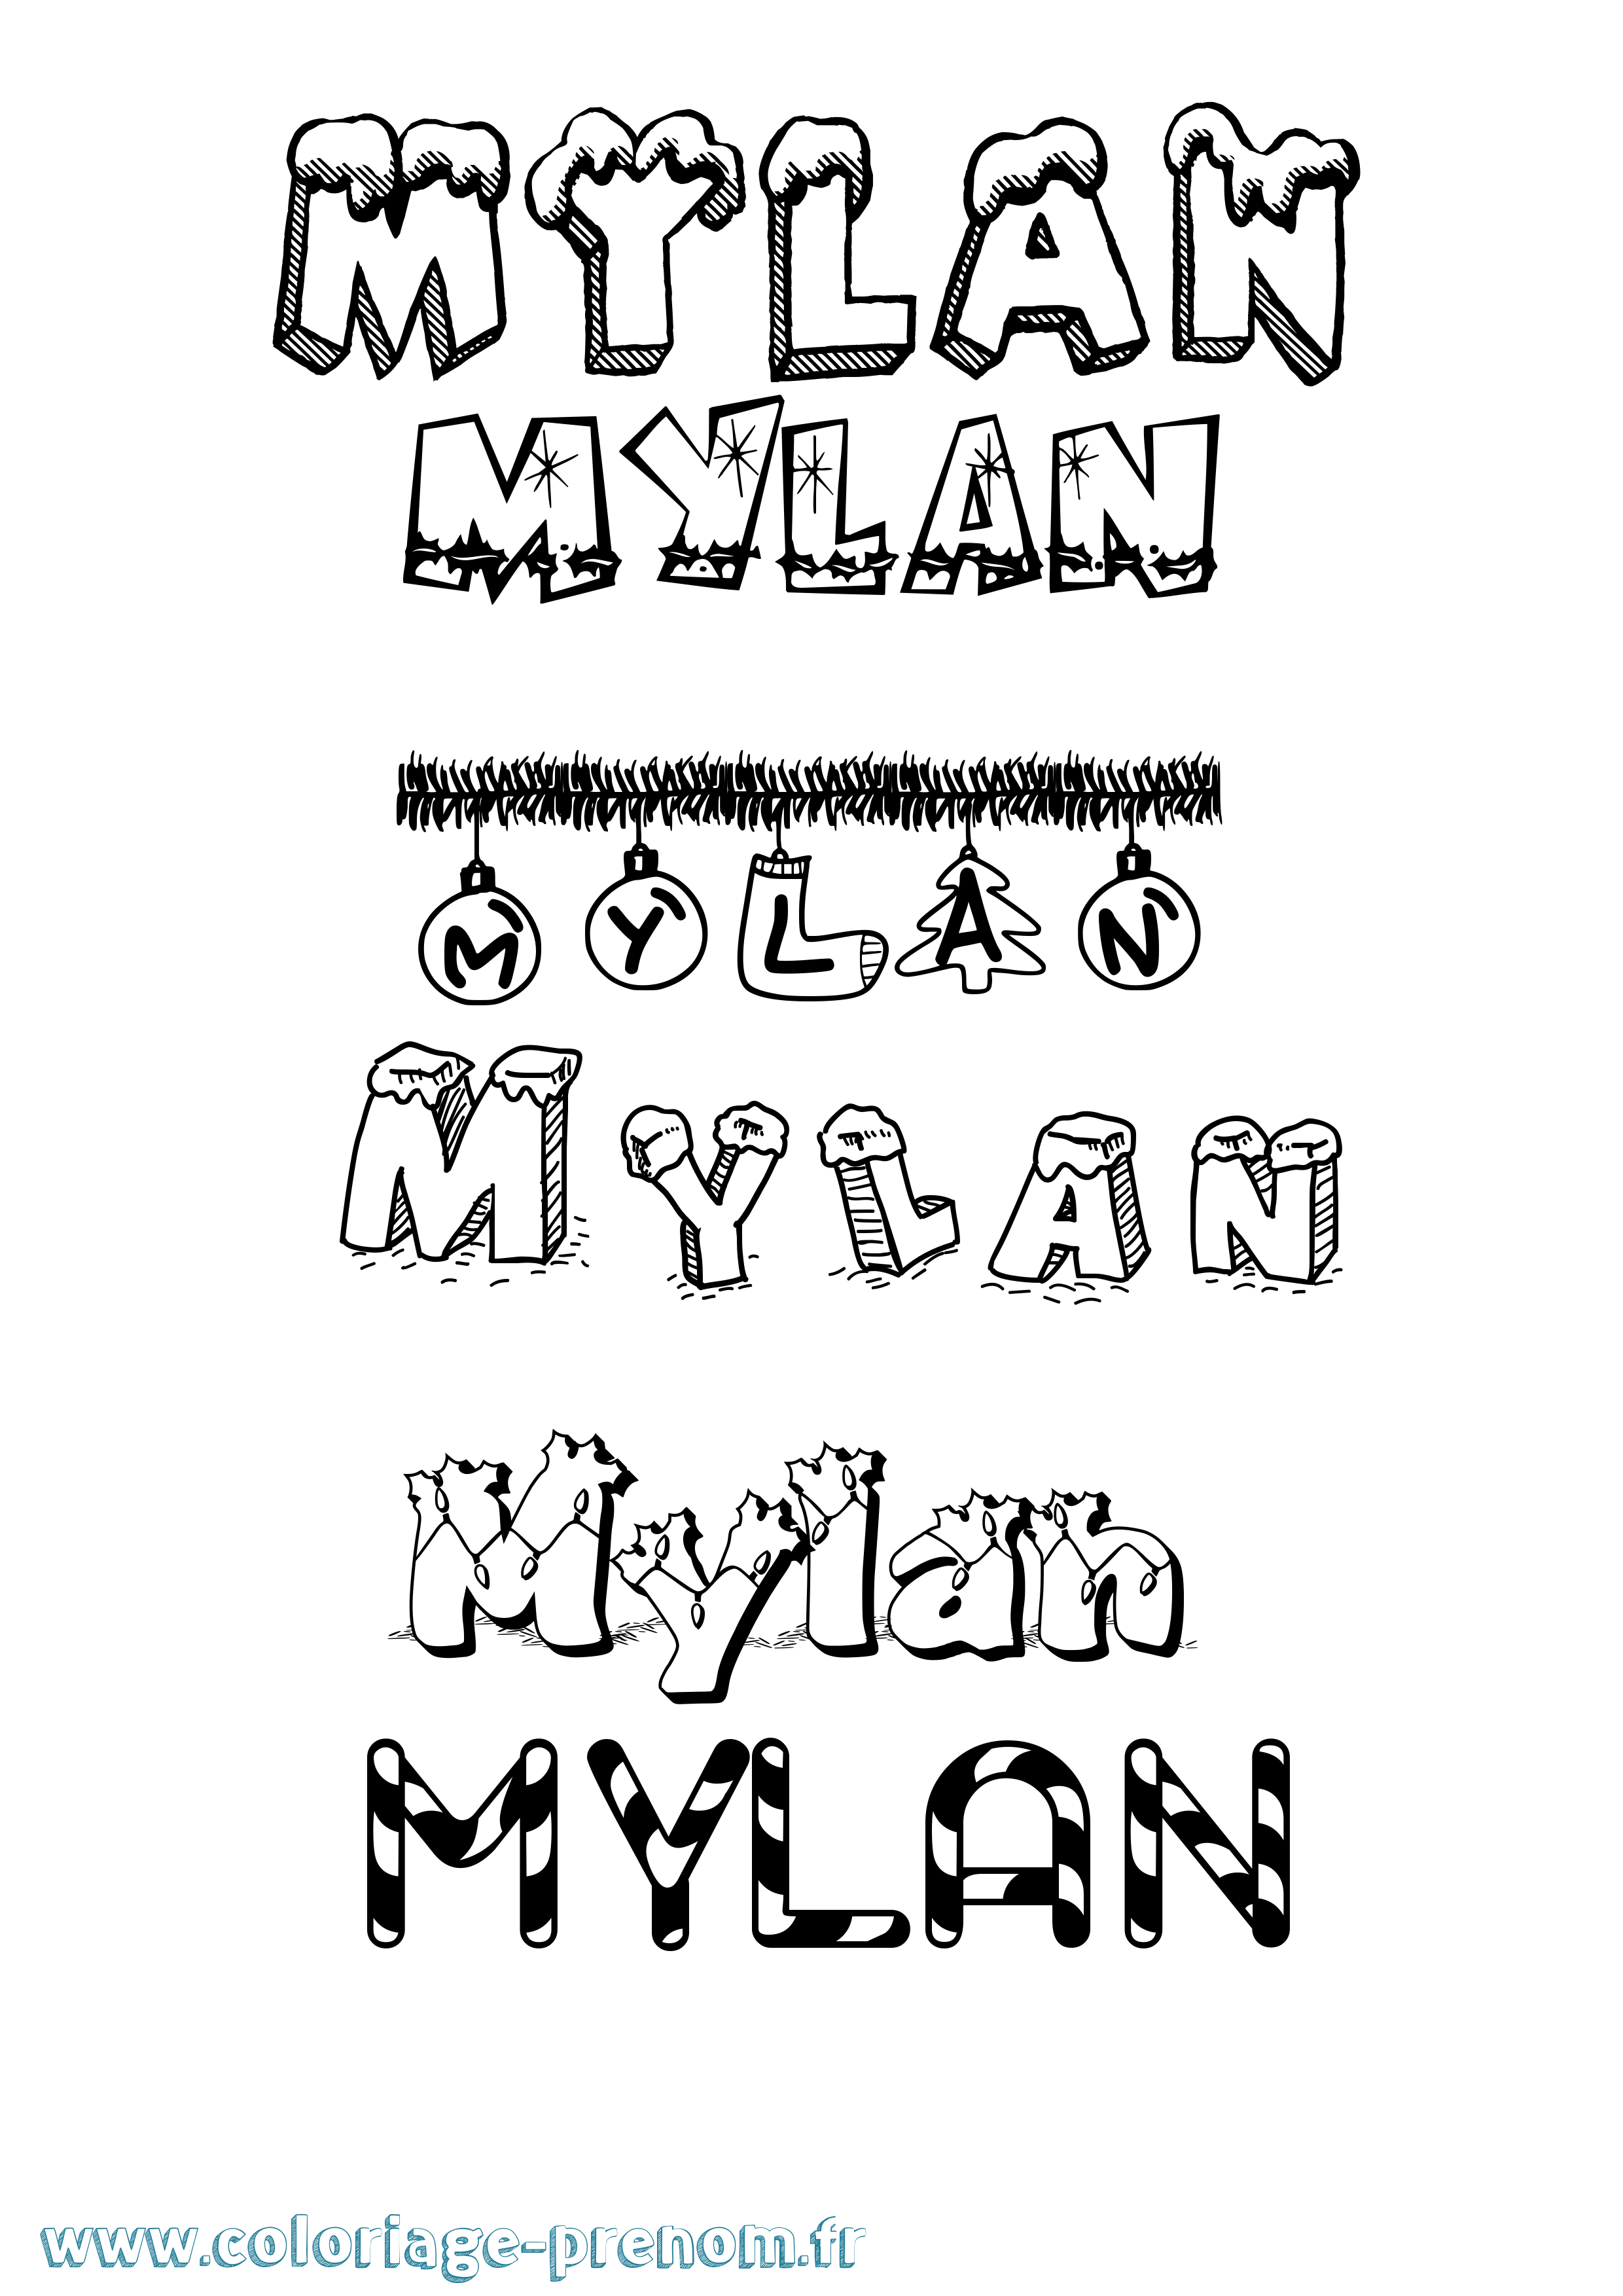 Coloriage prénom Mylan